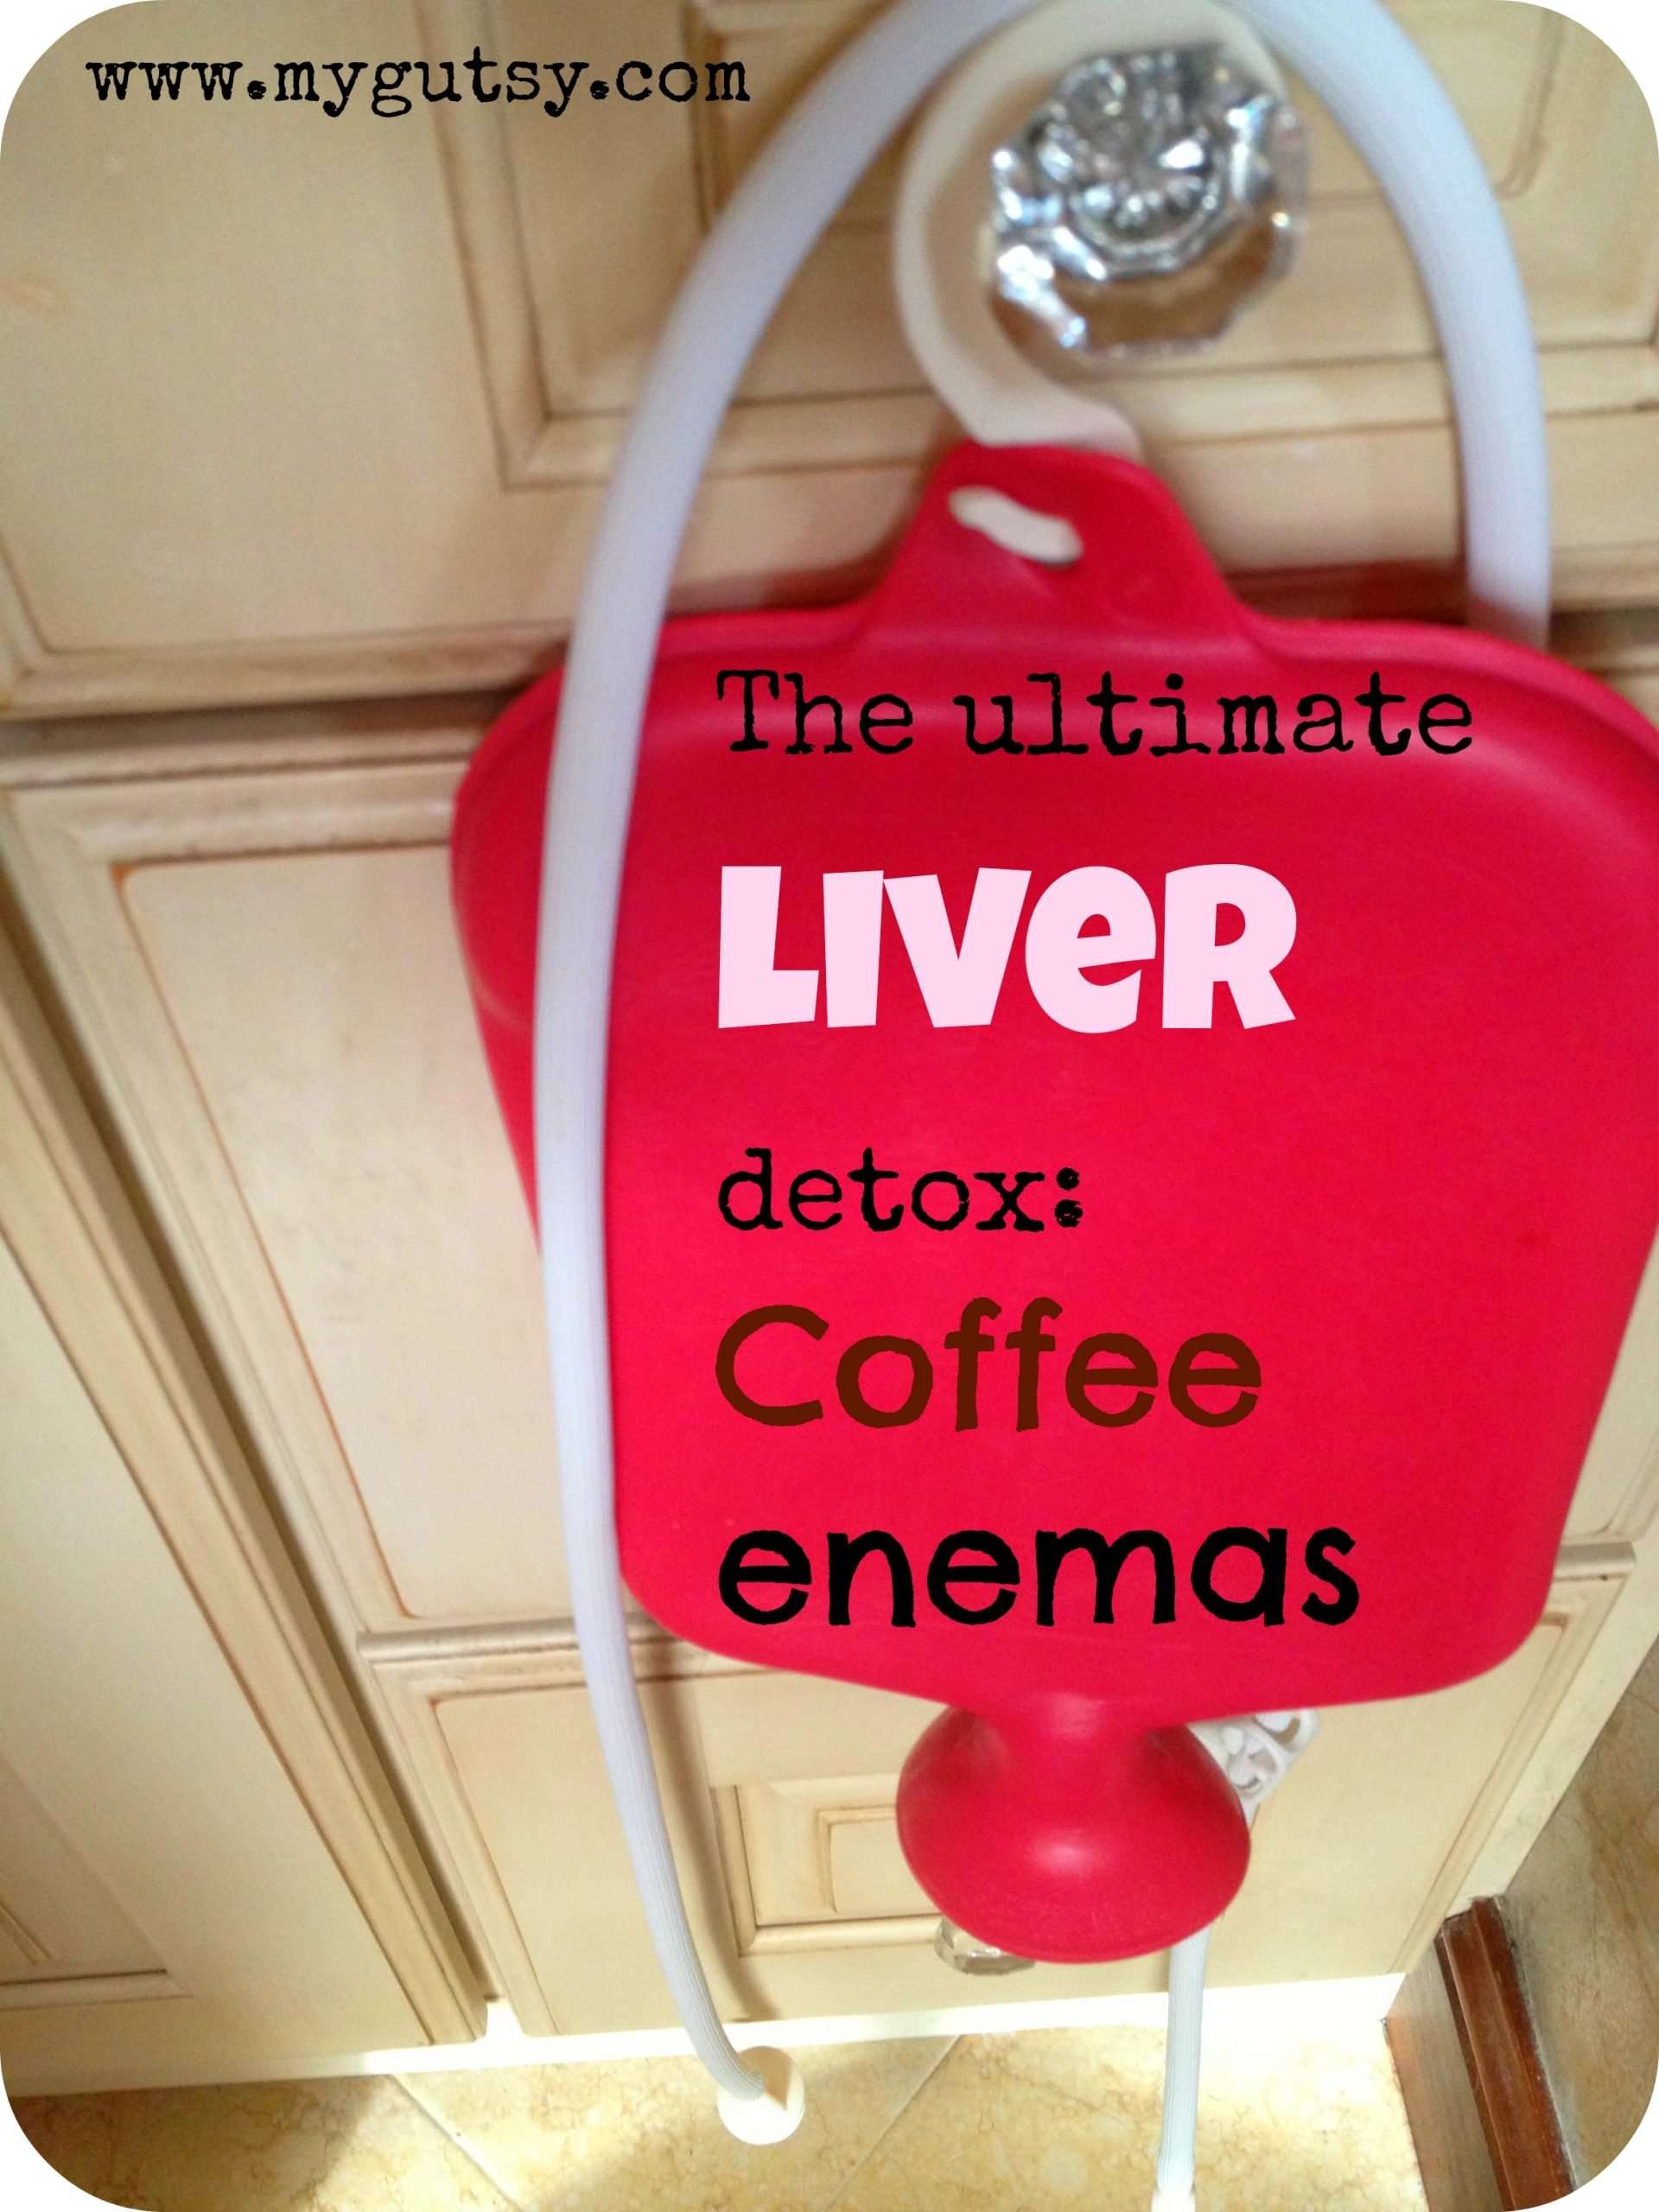 The ultimate liver detox: Coffee enemas